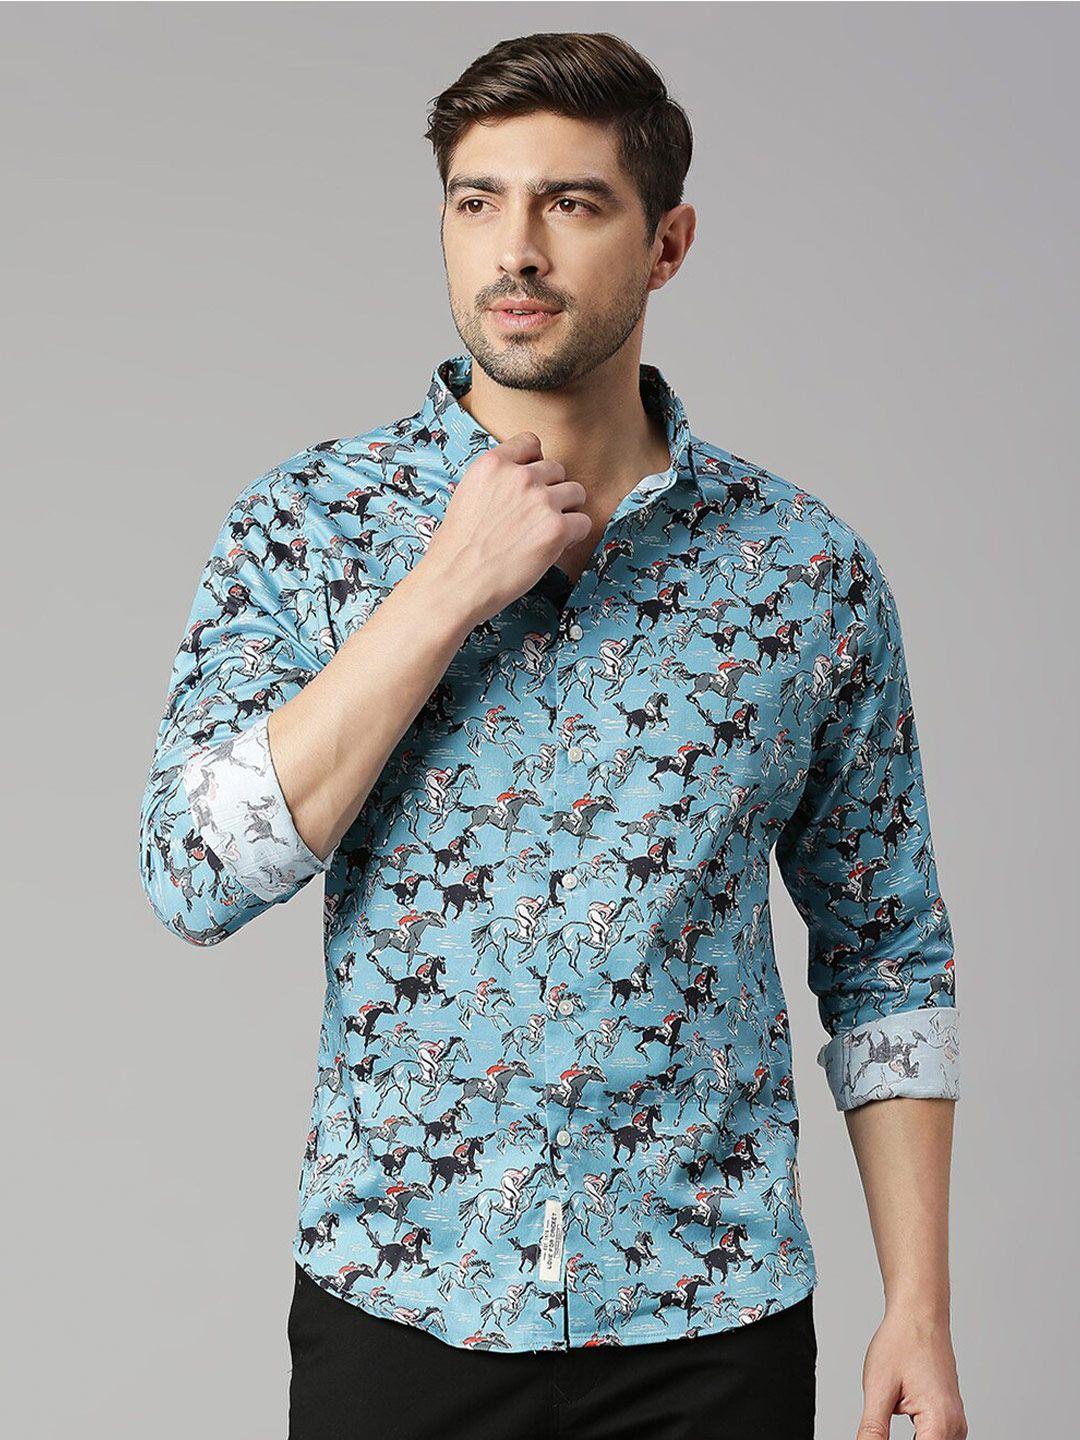 thomas scott classic slim fit conversational printed pure cotton casual shirt